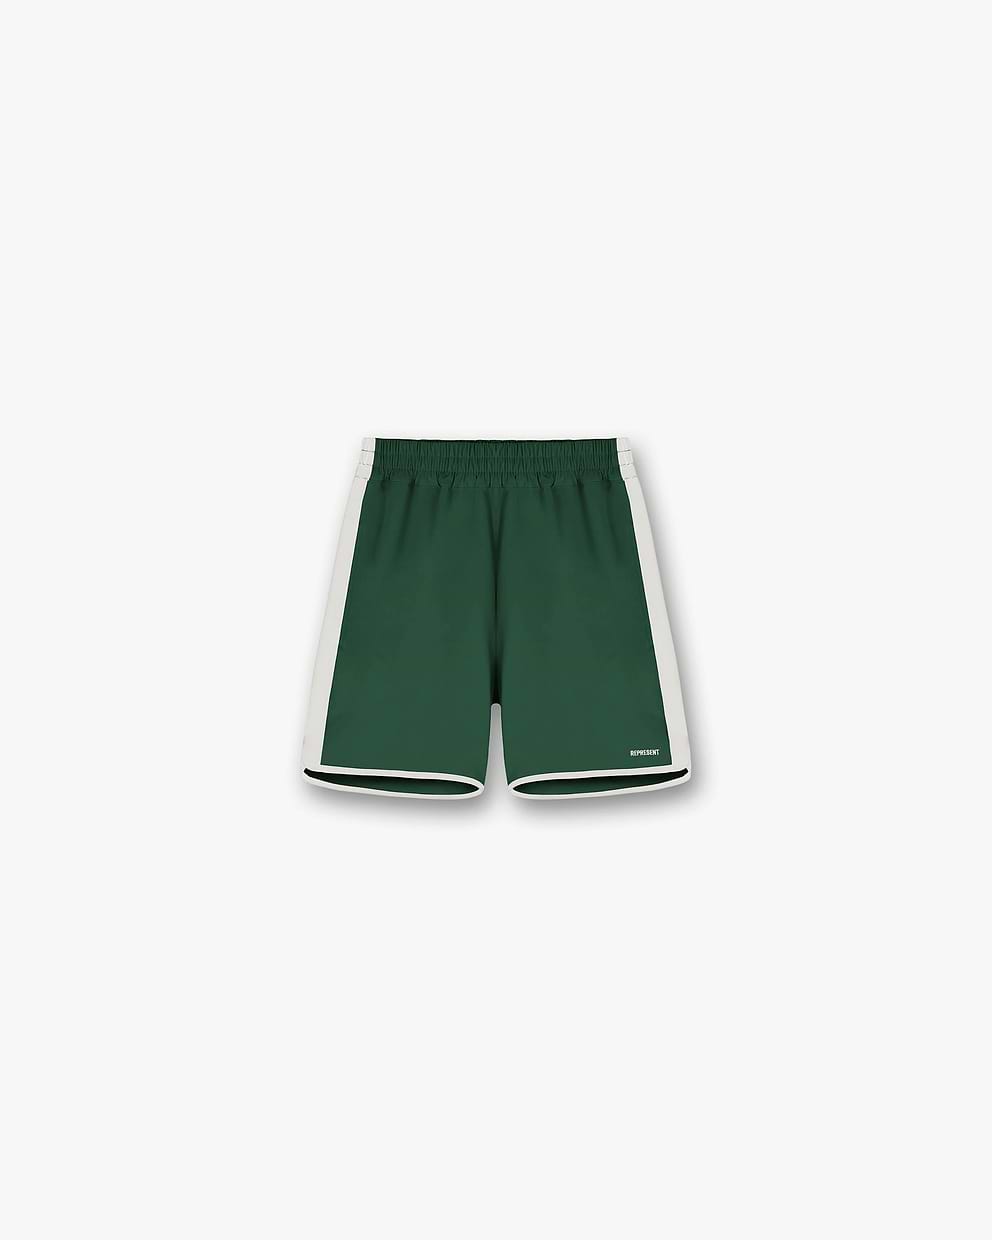 Souvenir Shorts - Racing Green